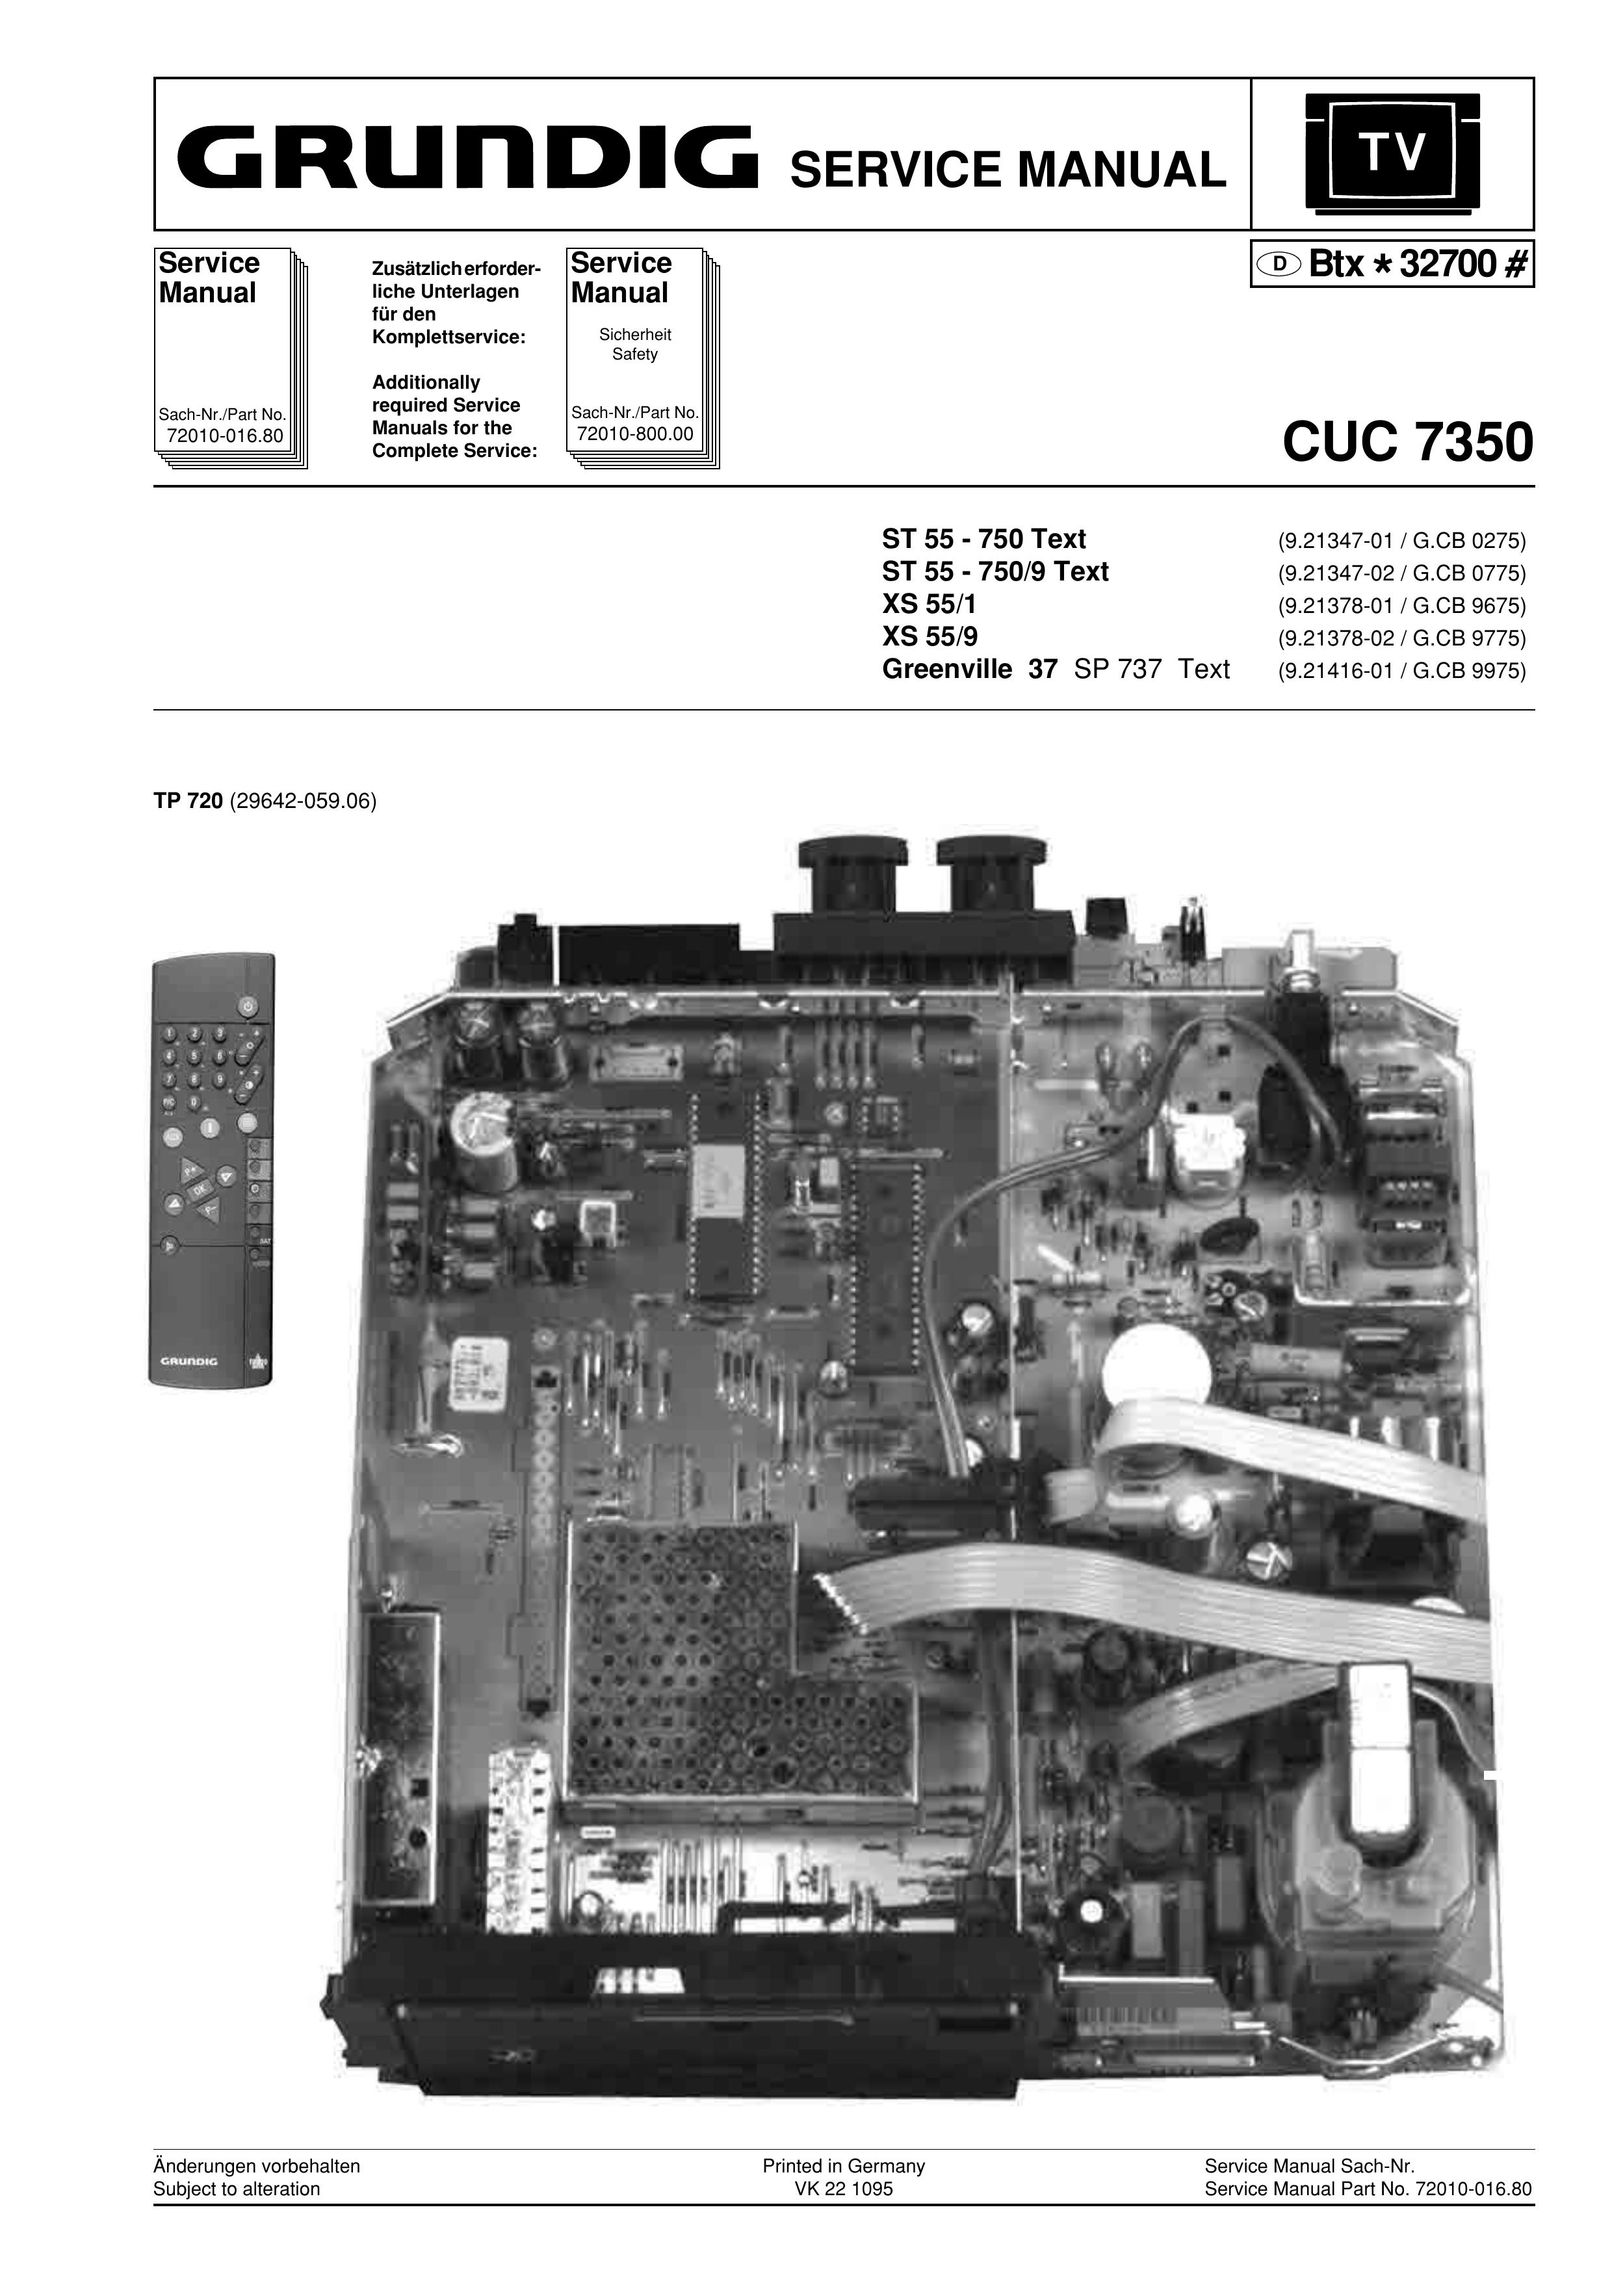 Grundig XS 55/1 Network Card User Manual